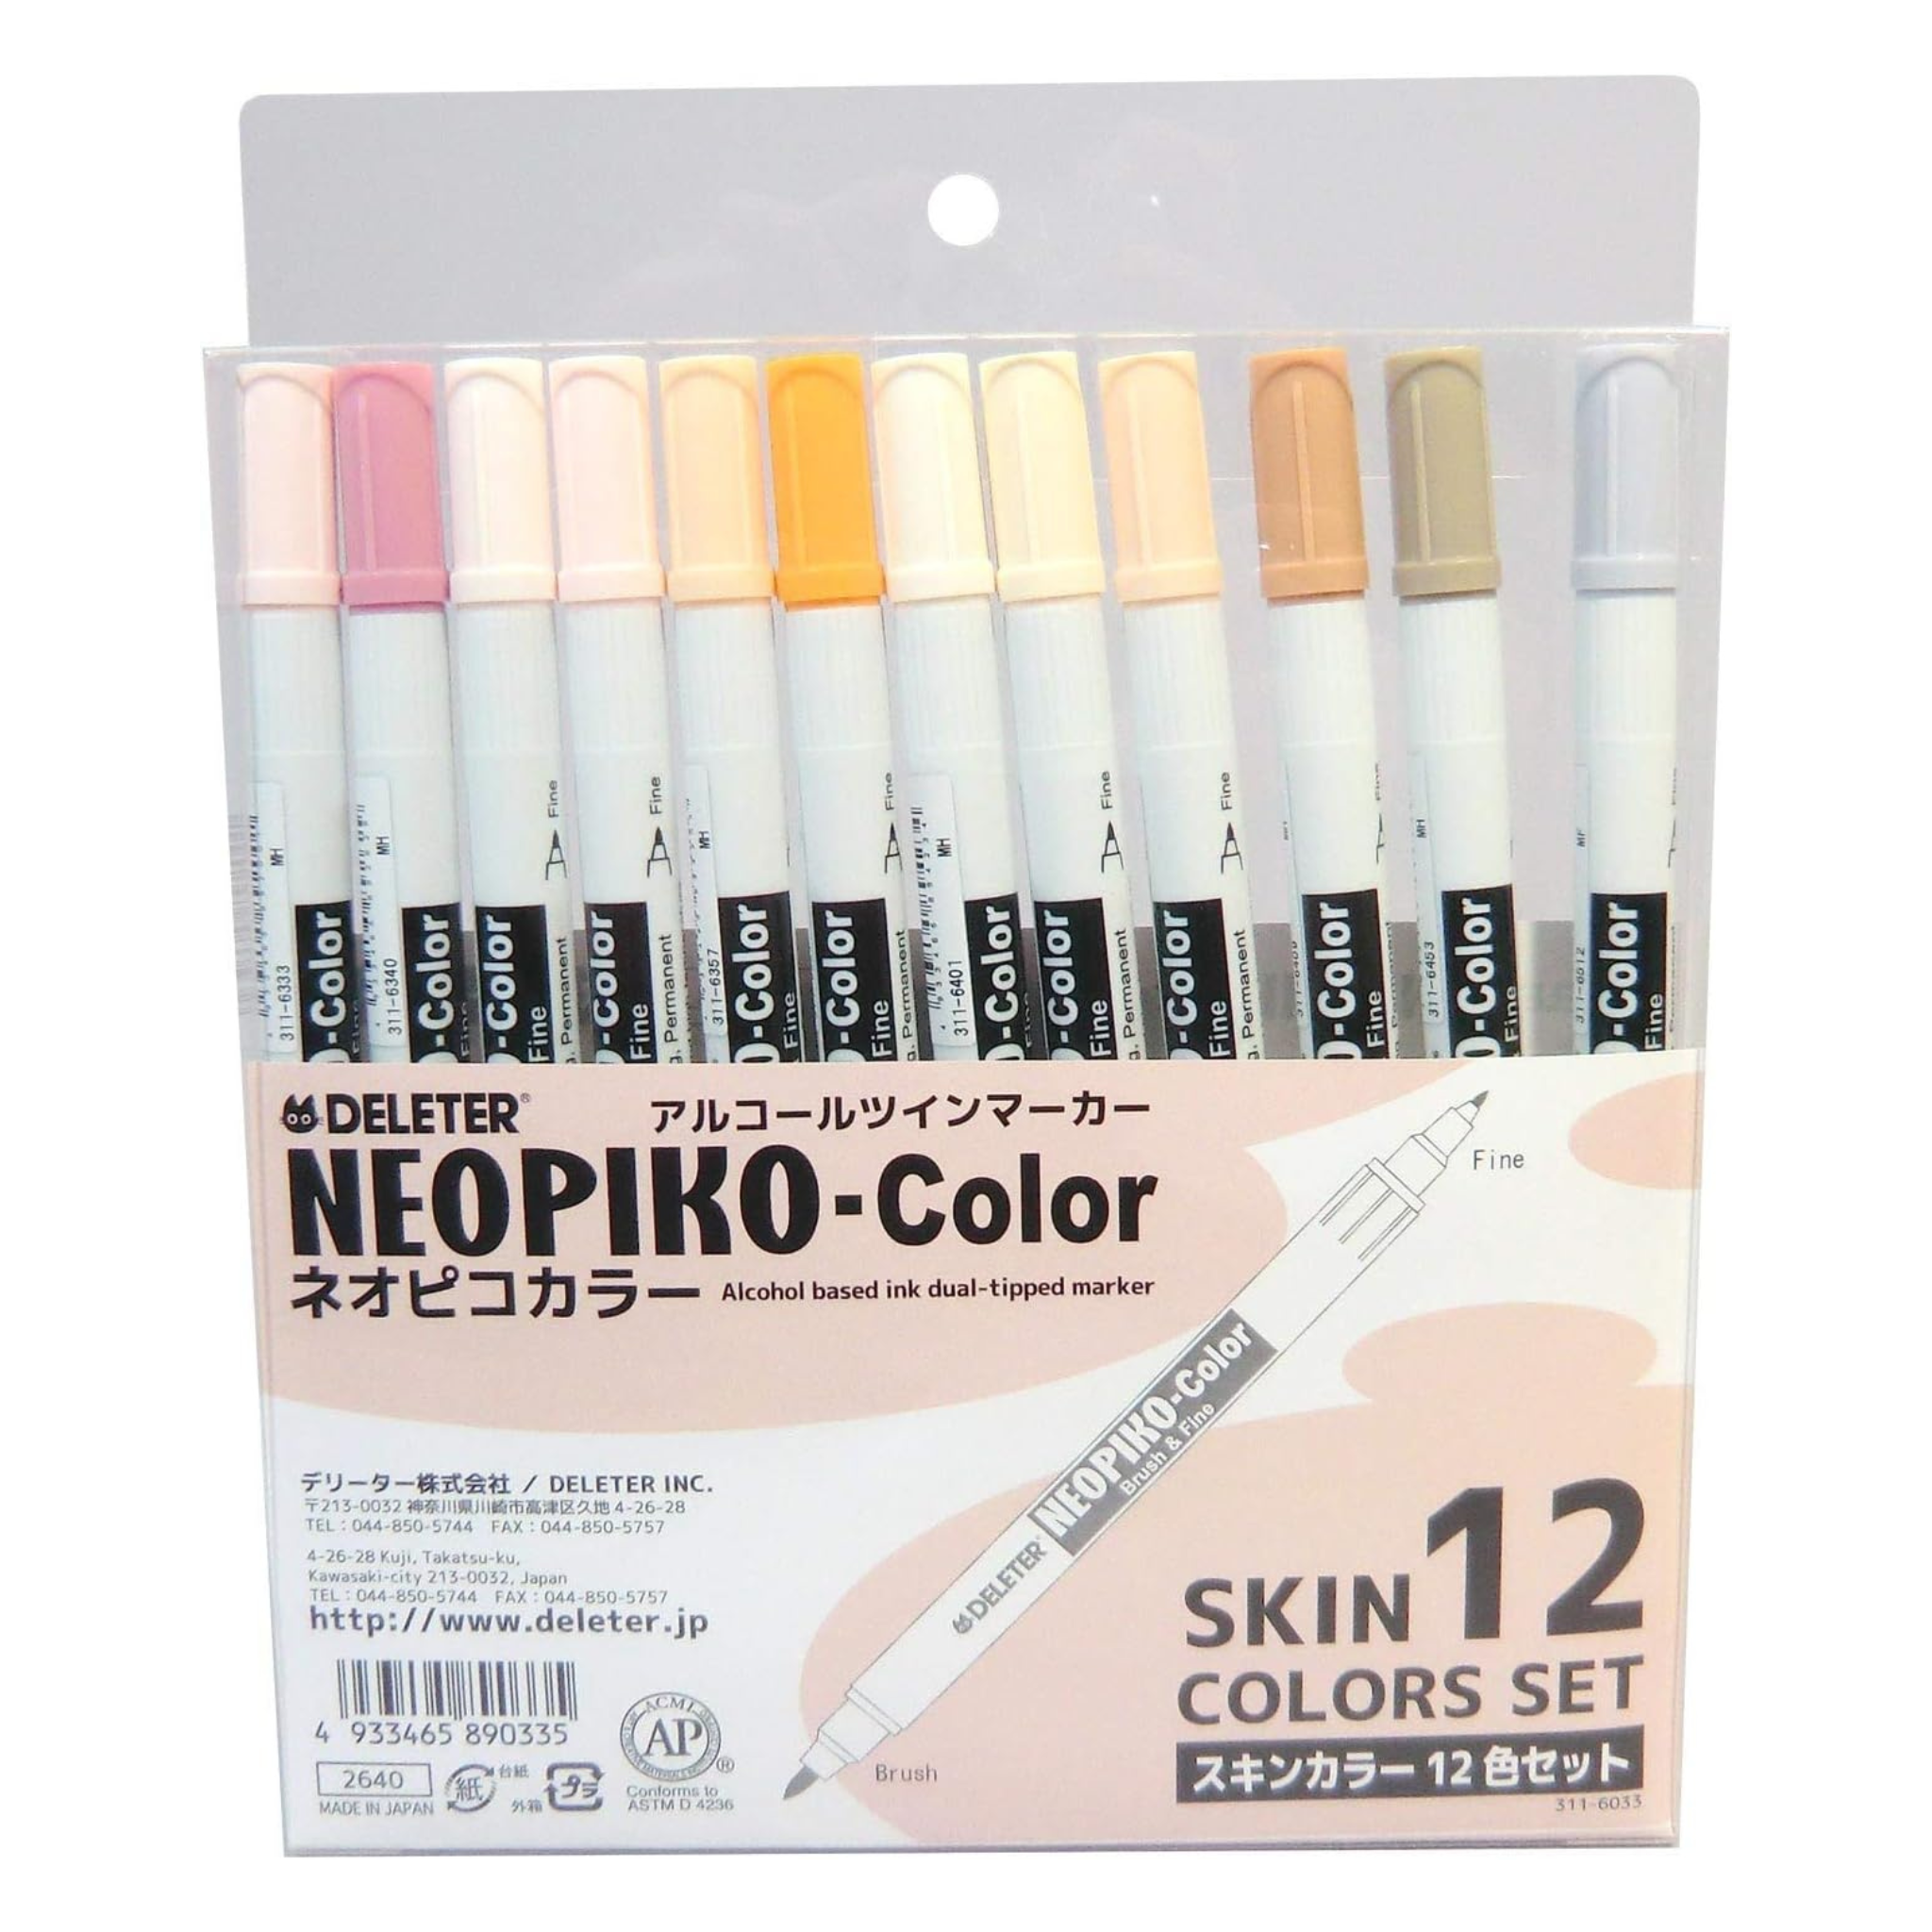 DELETER Neopiko Color, Skin 12 colors set